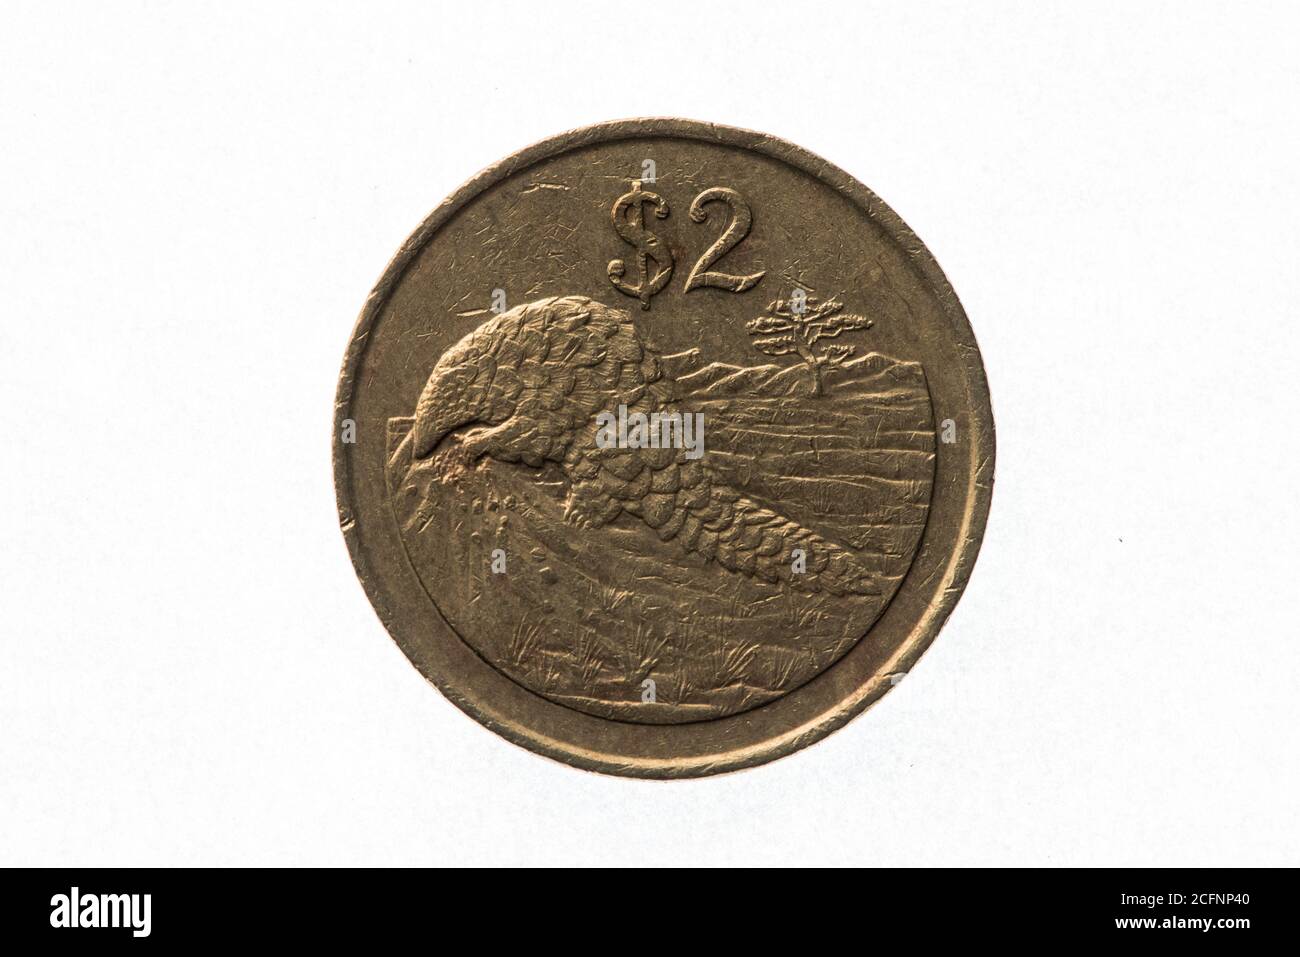 An African Pangolin, an endangered animal, on the 2 dollar coin of Zimbabwe. Stock Photo